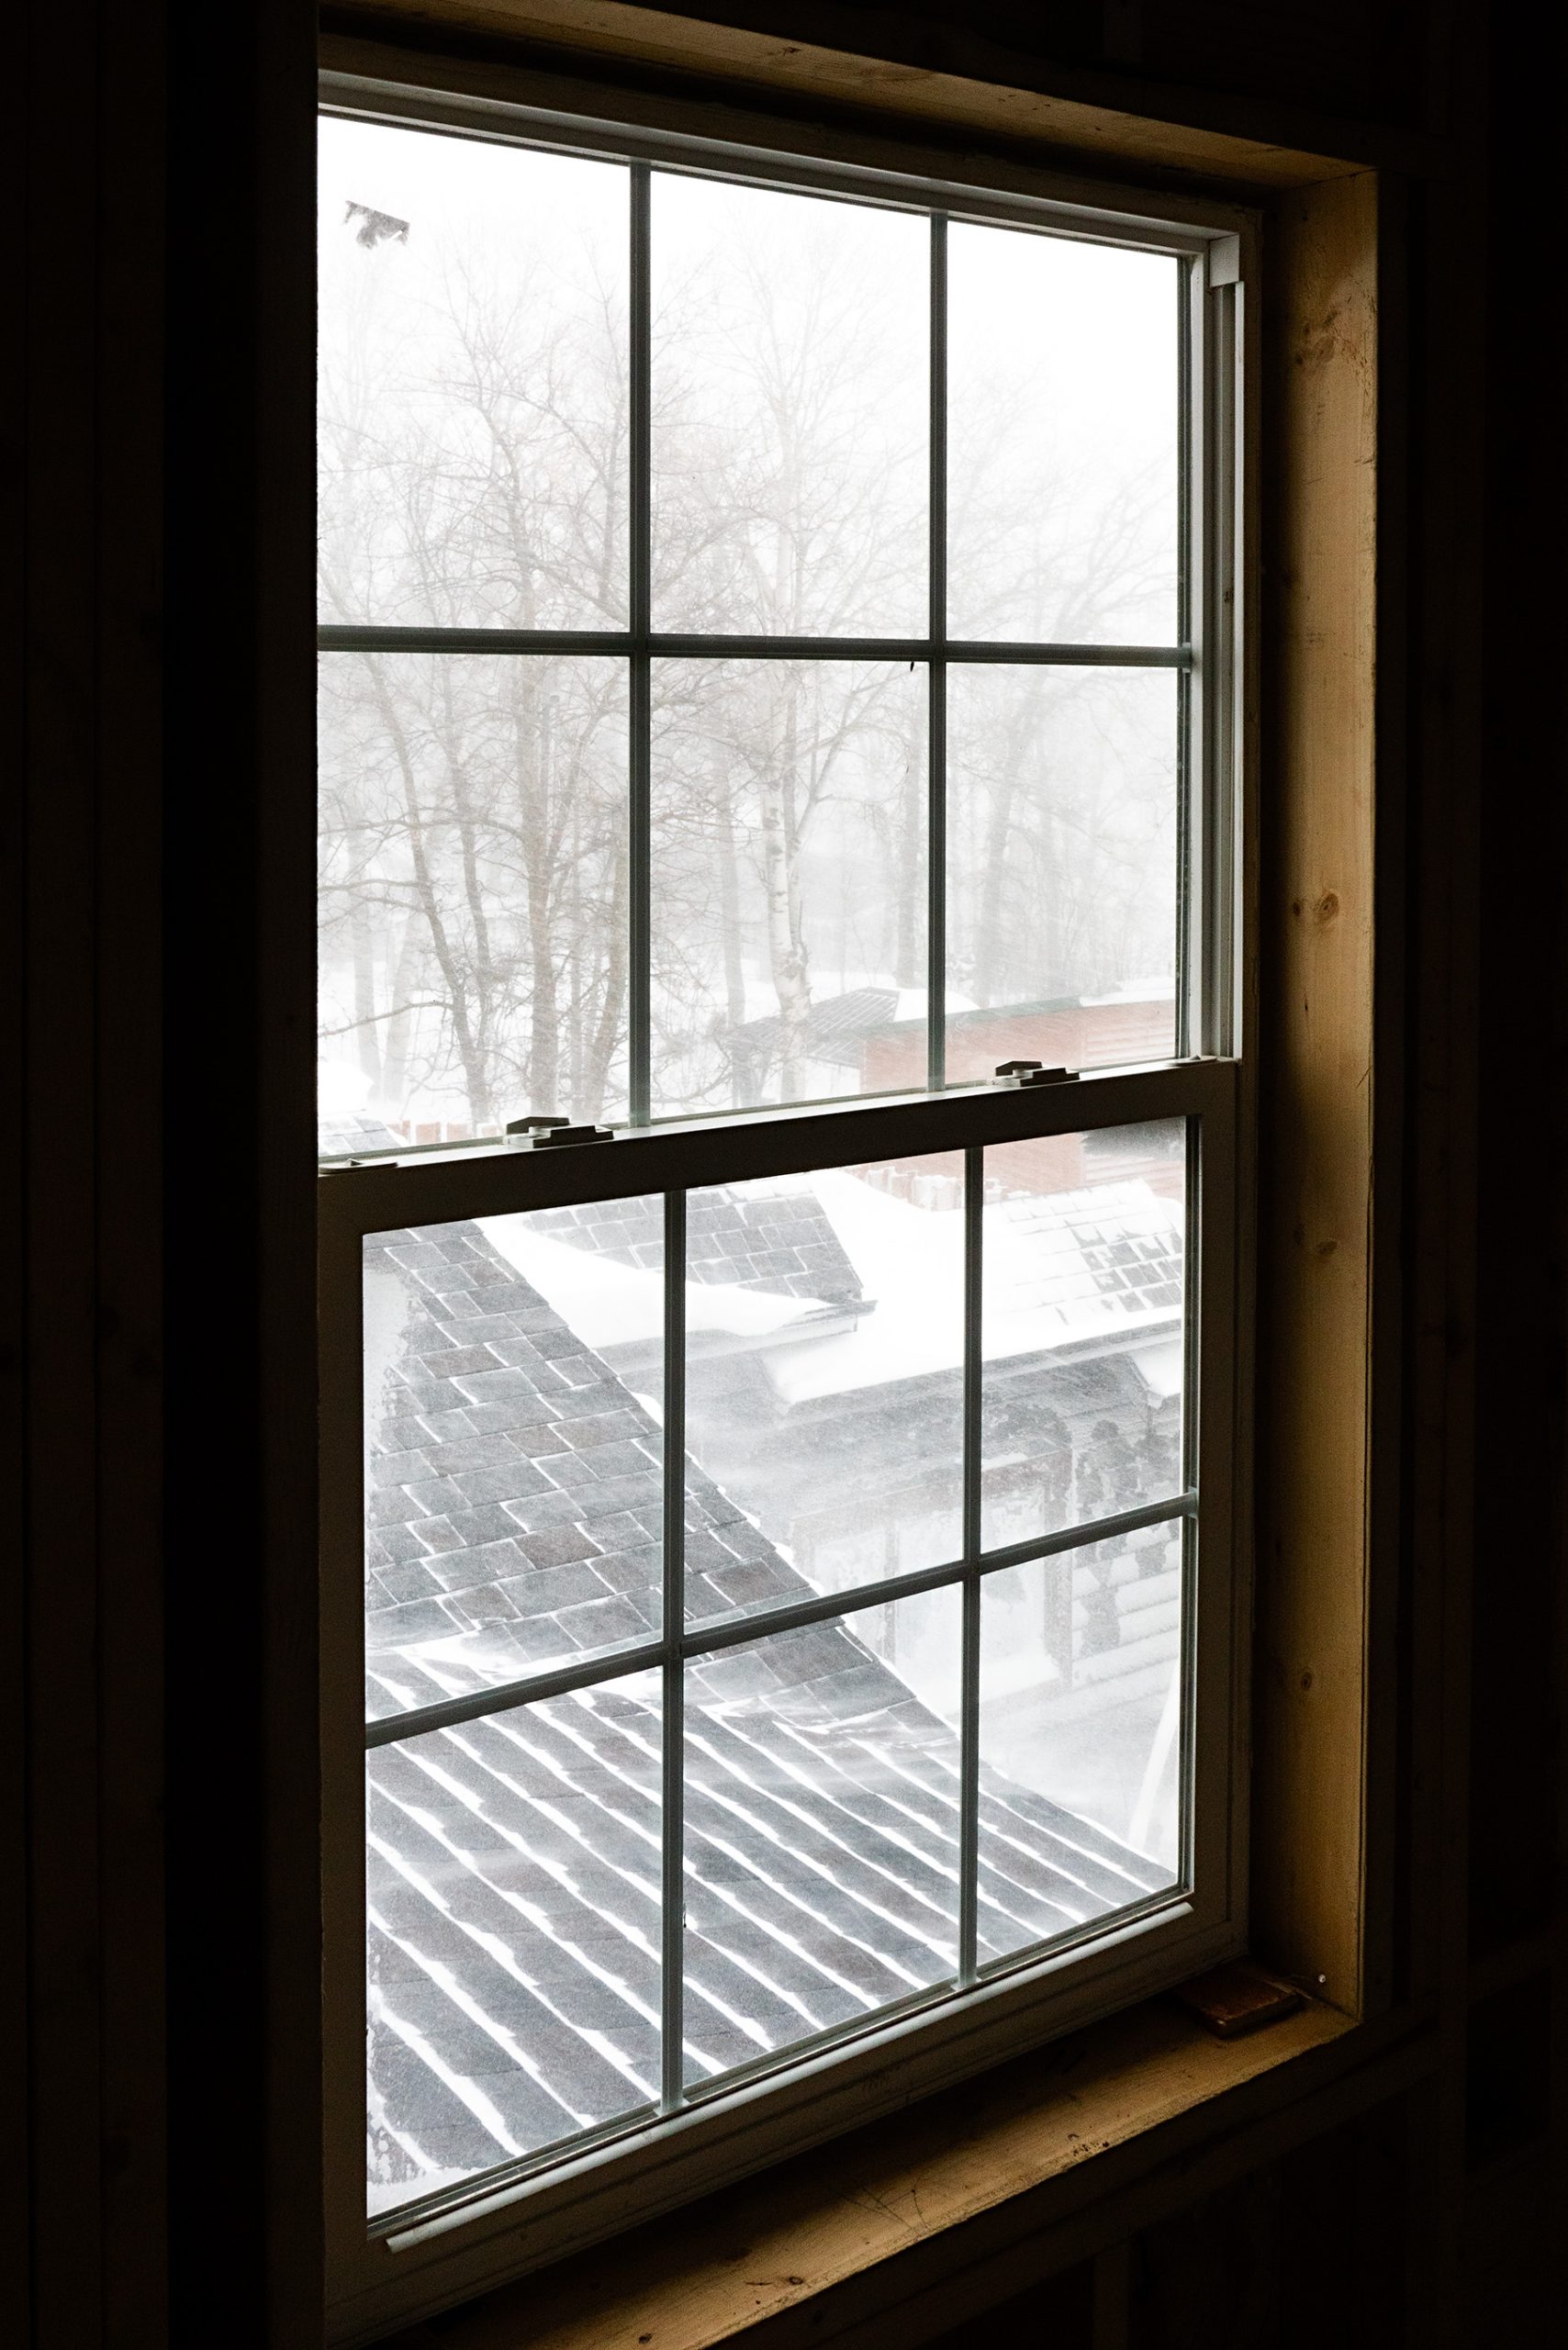 Blizzard through the window